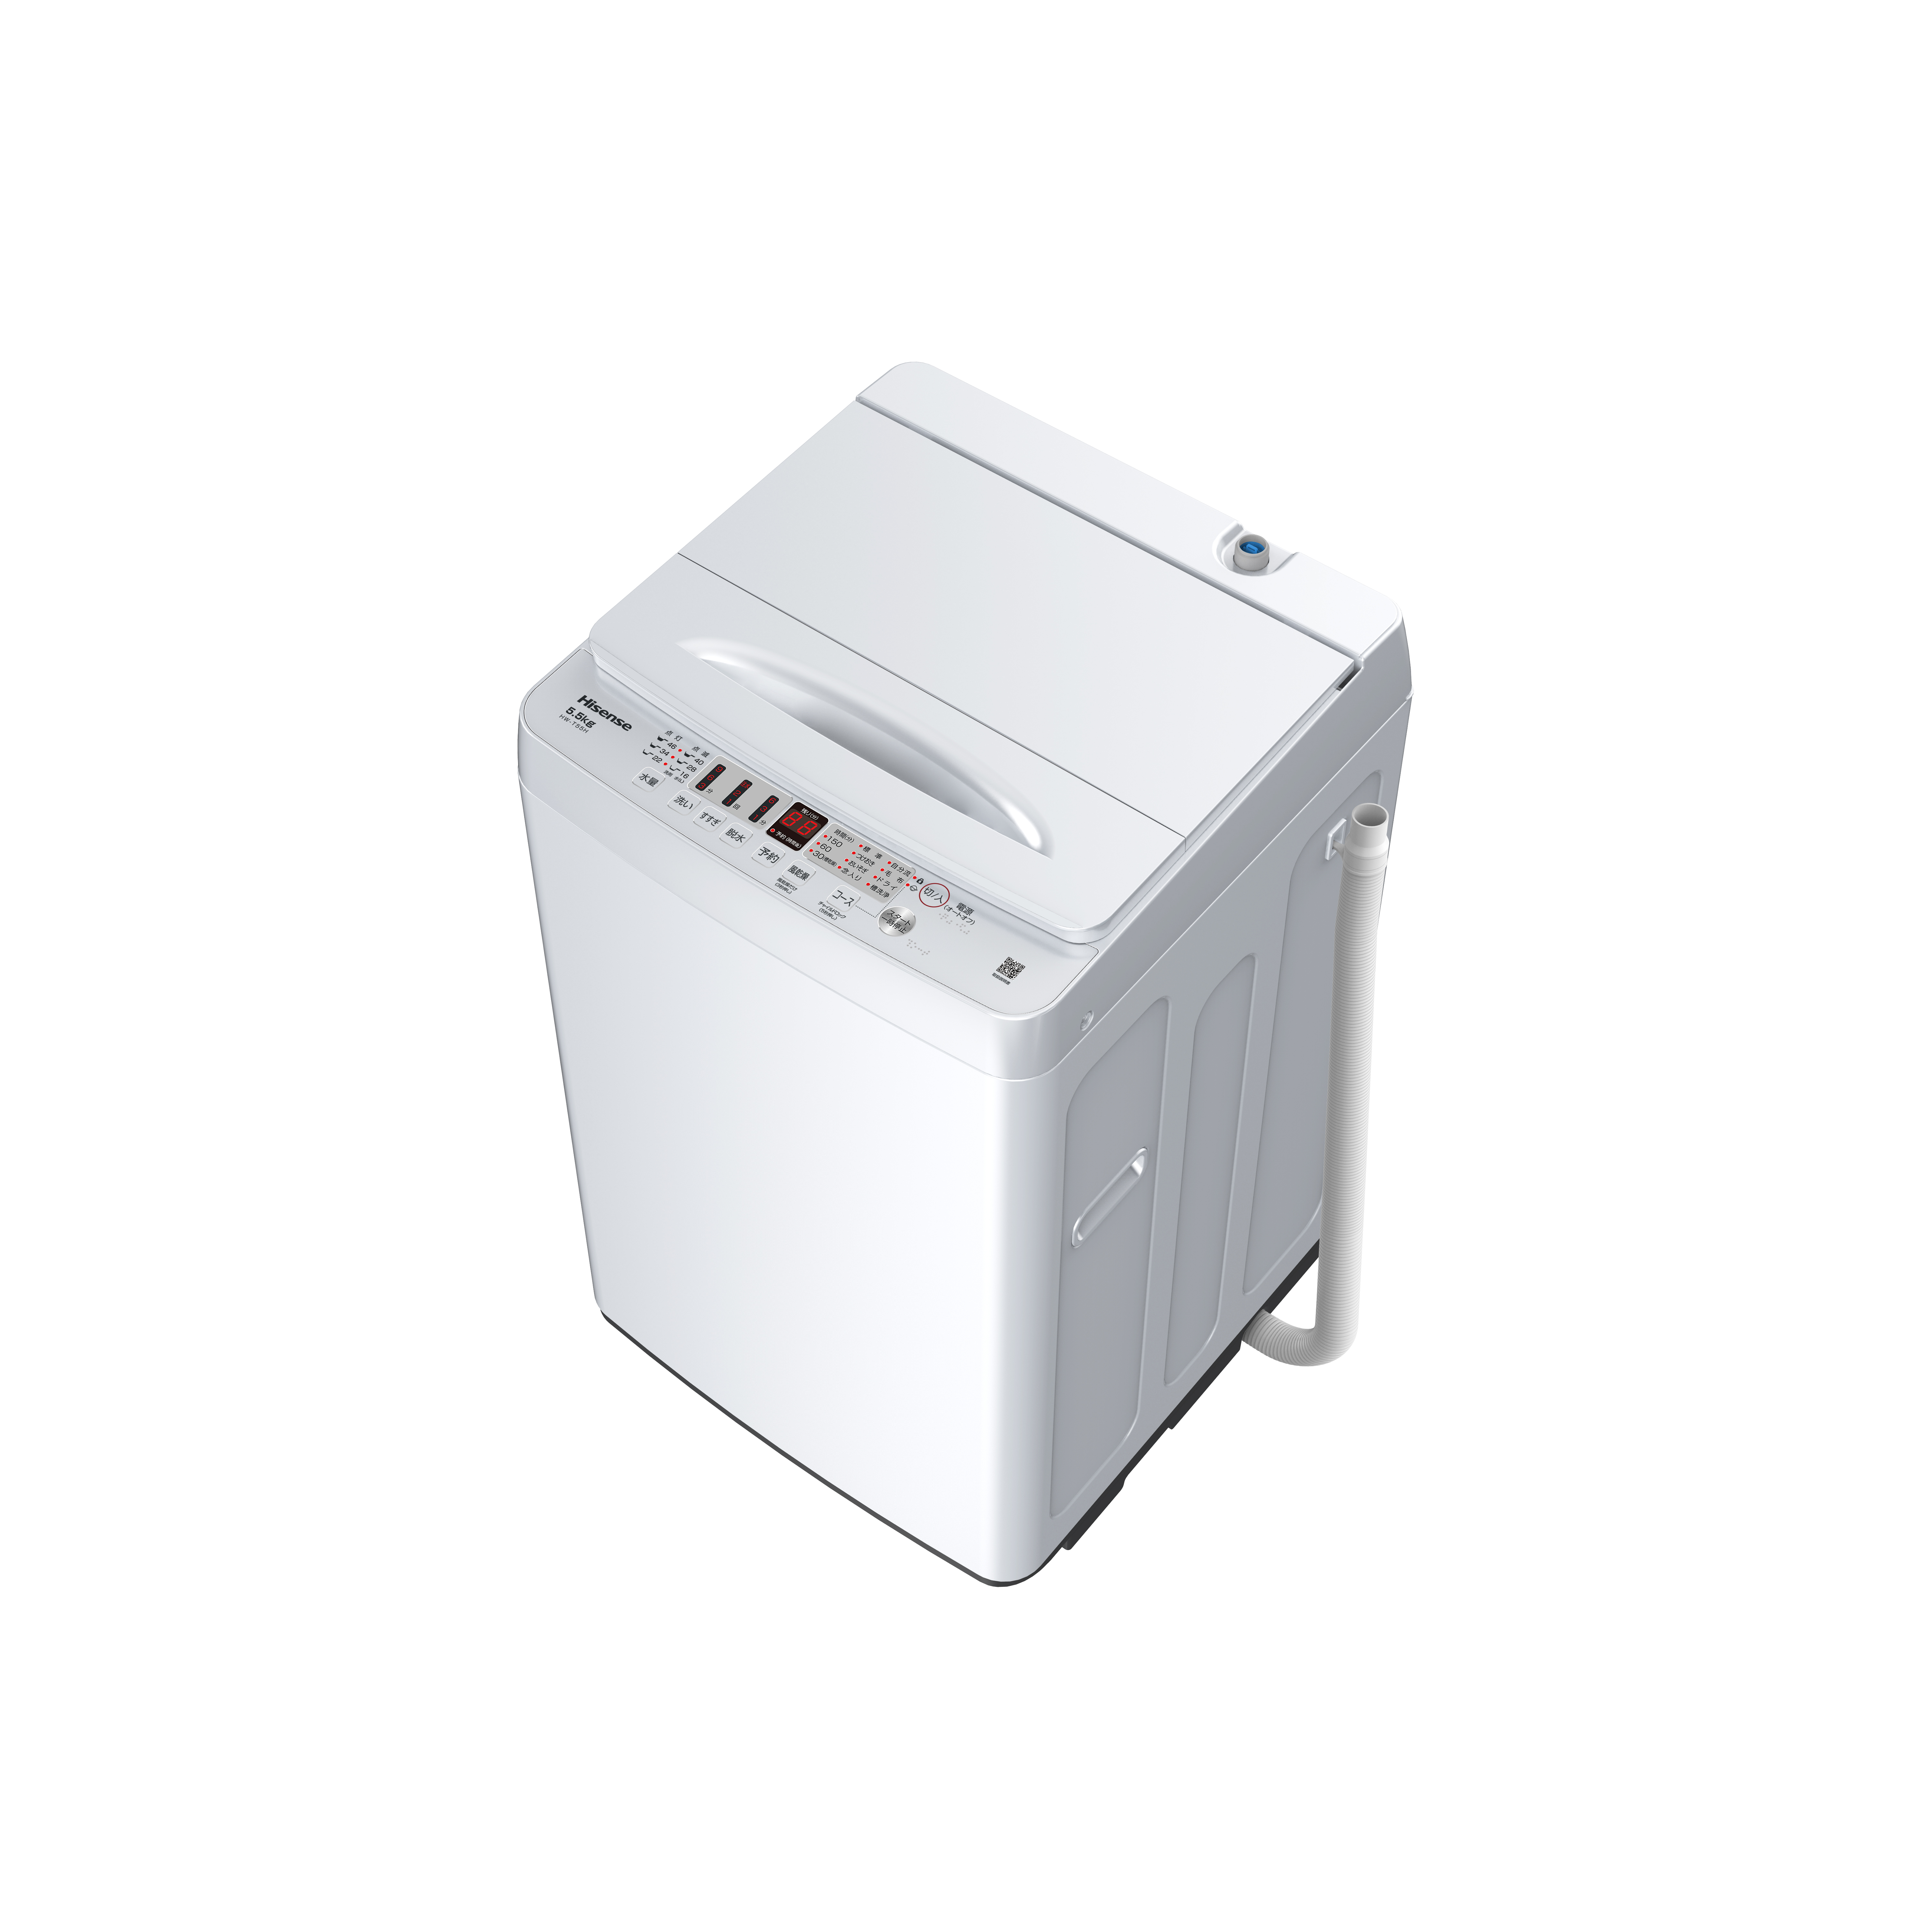 岐阜市出品 ハイセンス 全自動洗濯機 HW-E5503 2020年 5.5kg - 洗濯機